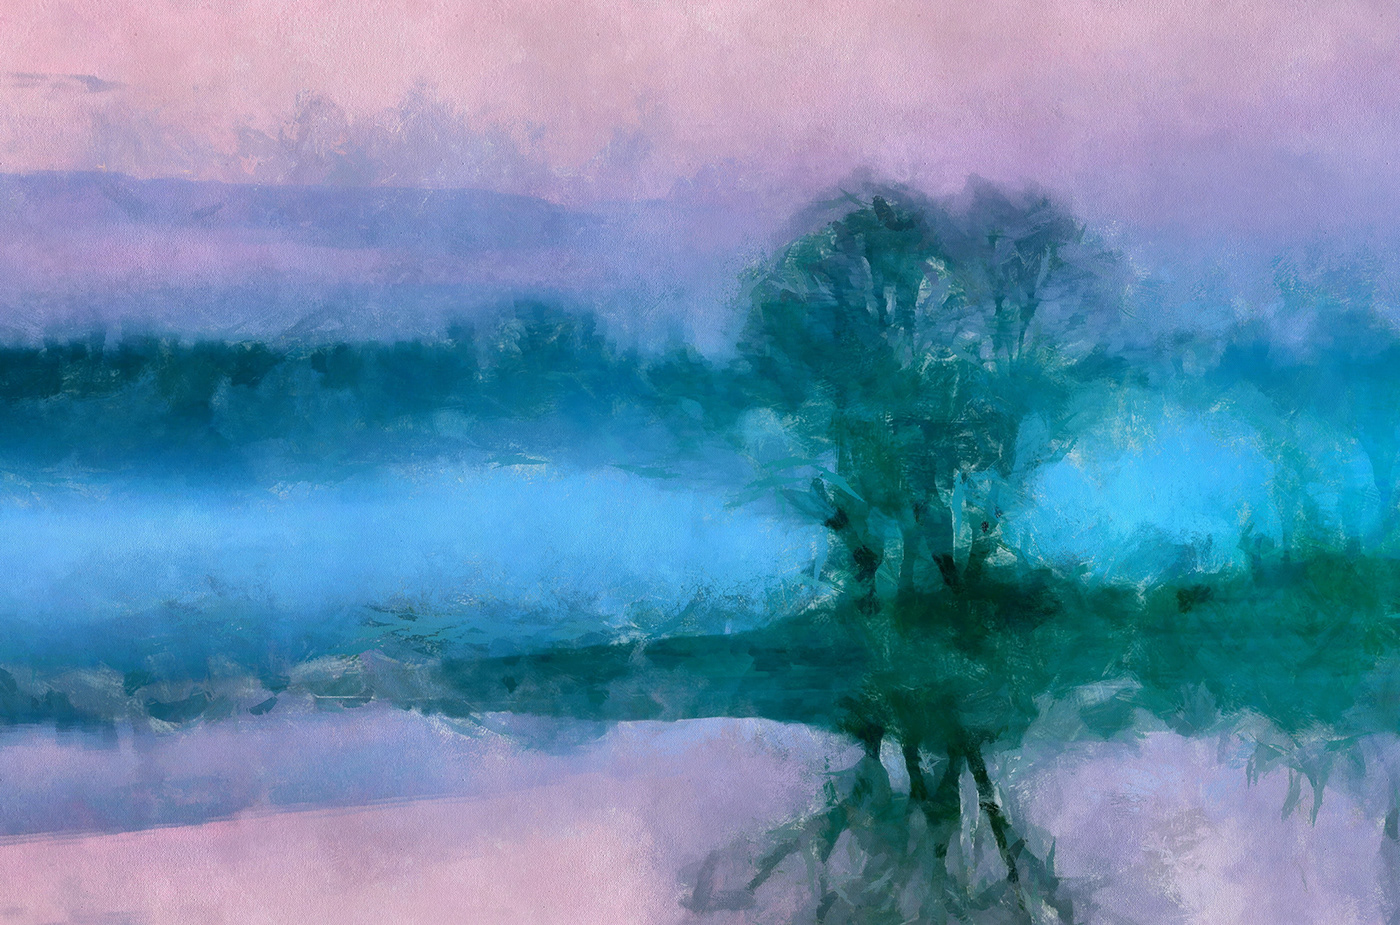 art calmness flood impression Landscape mood painting   river silence spring